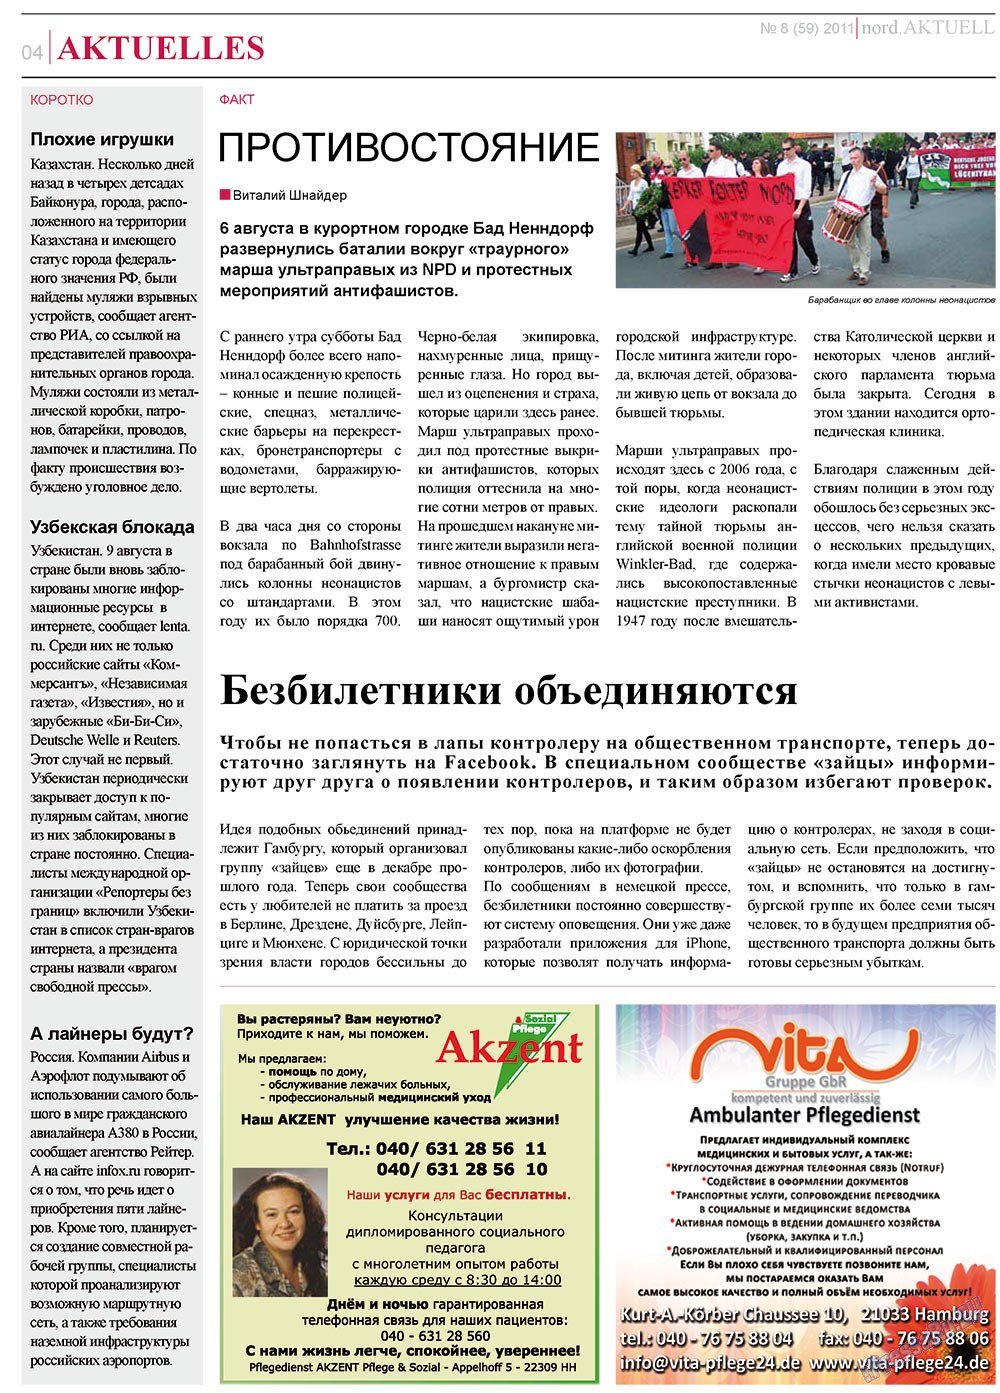 nord.Aktuell, газета. 2011 №8 стр.4